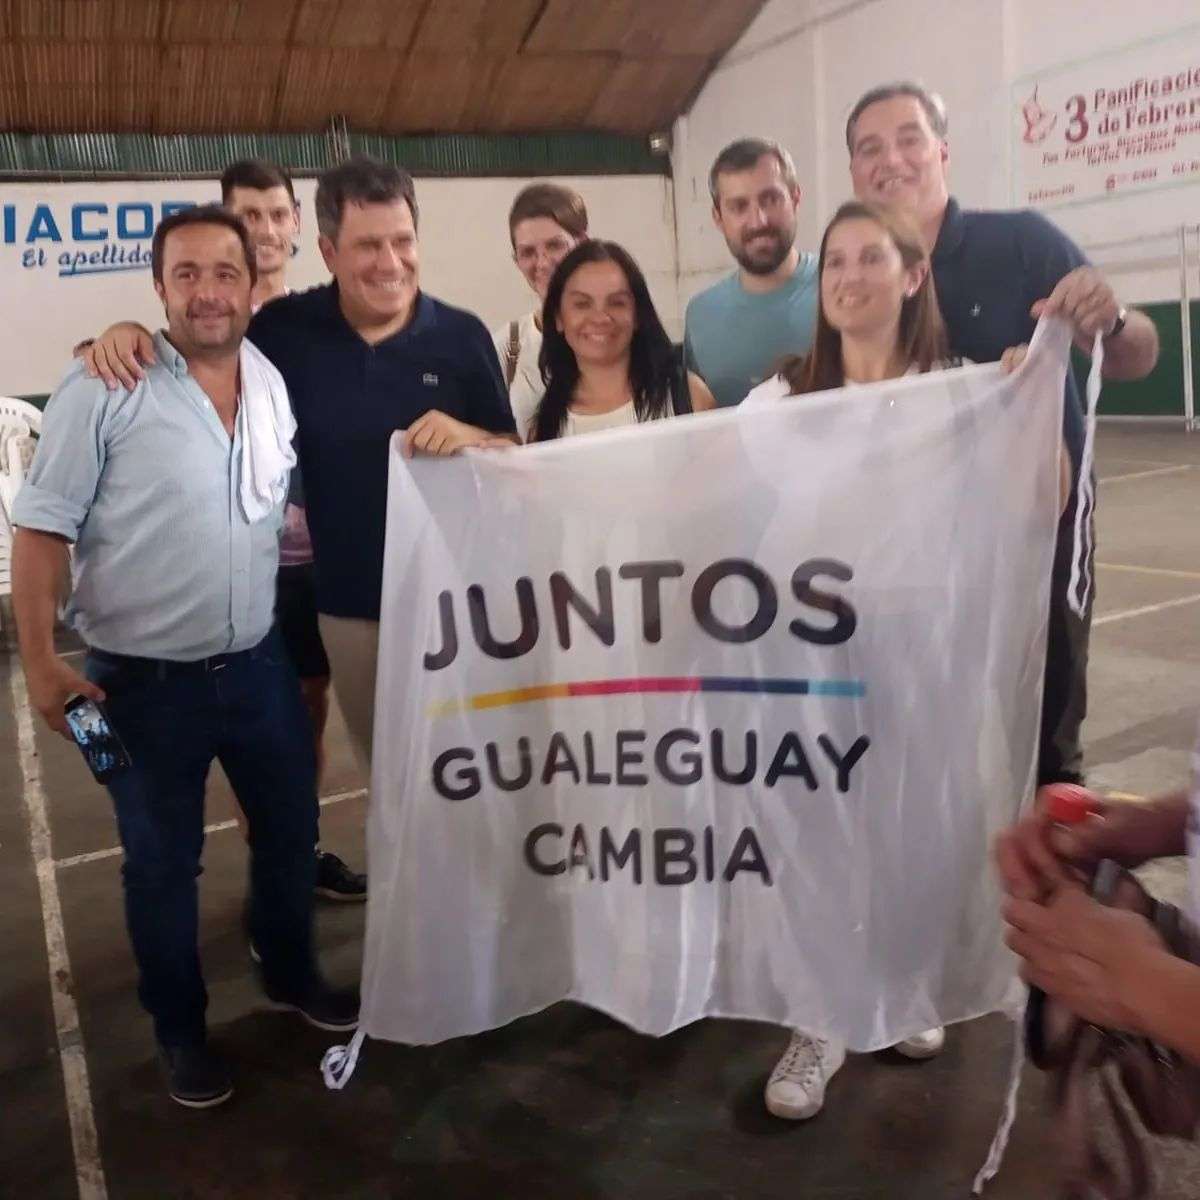 Gualeguay Cambia